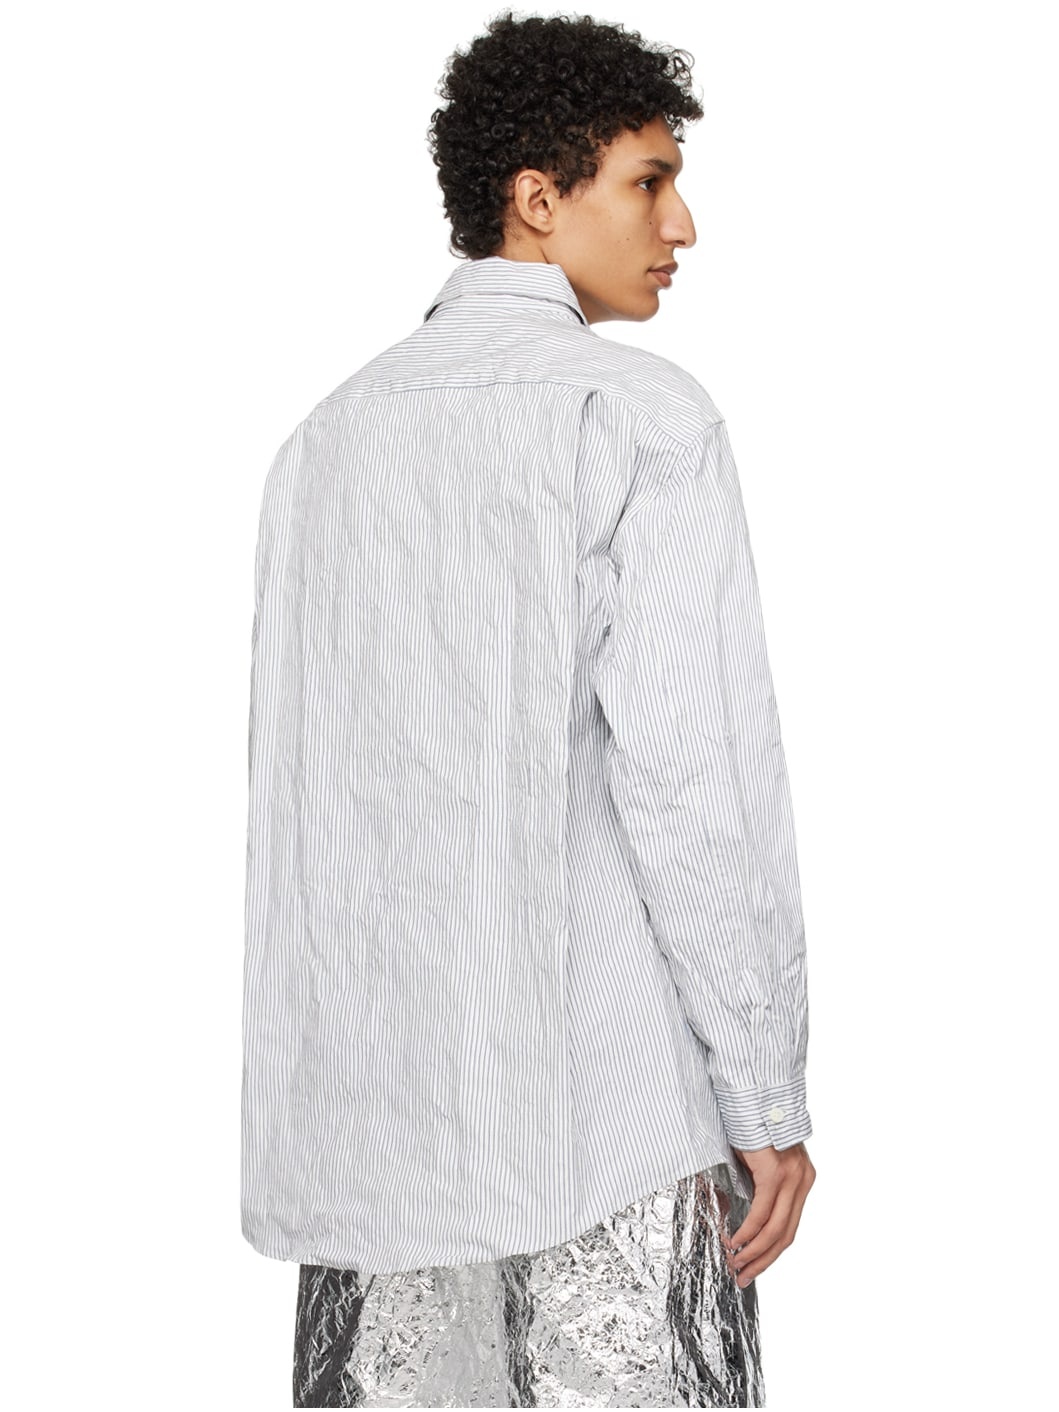 White & Navy Pinstripe Shirt - 3